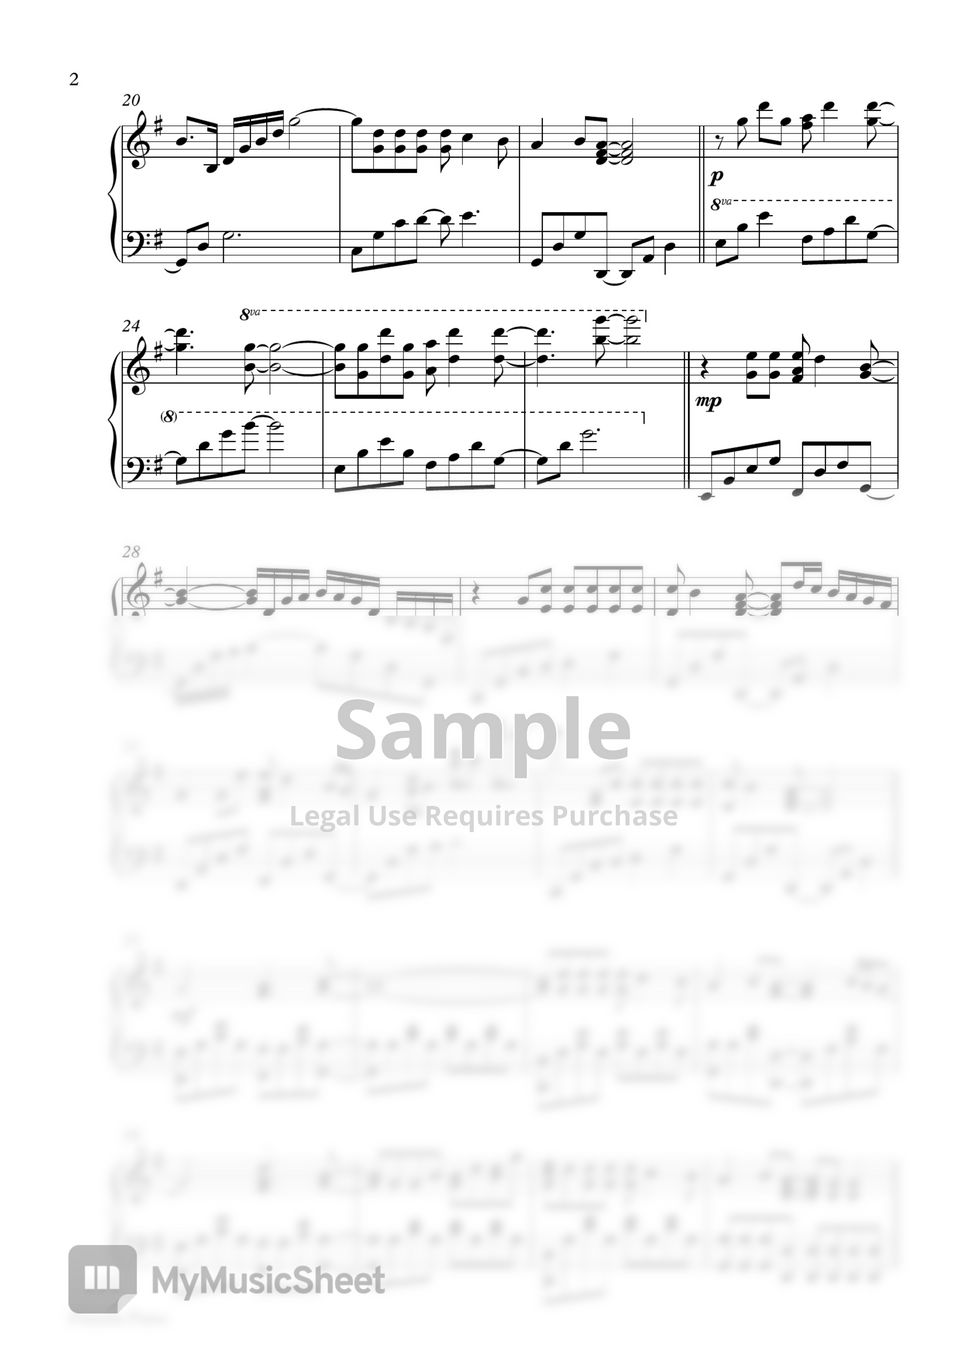 Lady Gaga, Bradley Cooper - Shallow (Piano Sheet) by Pianella Piano